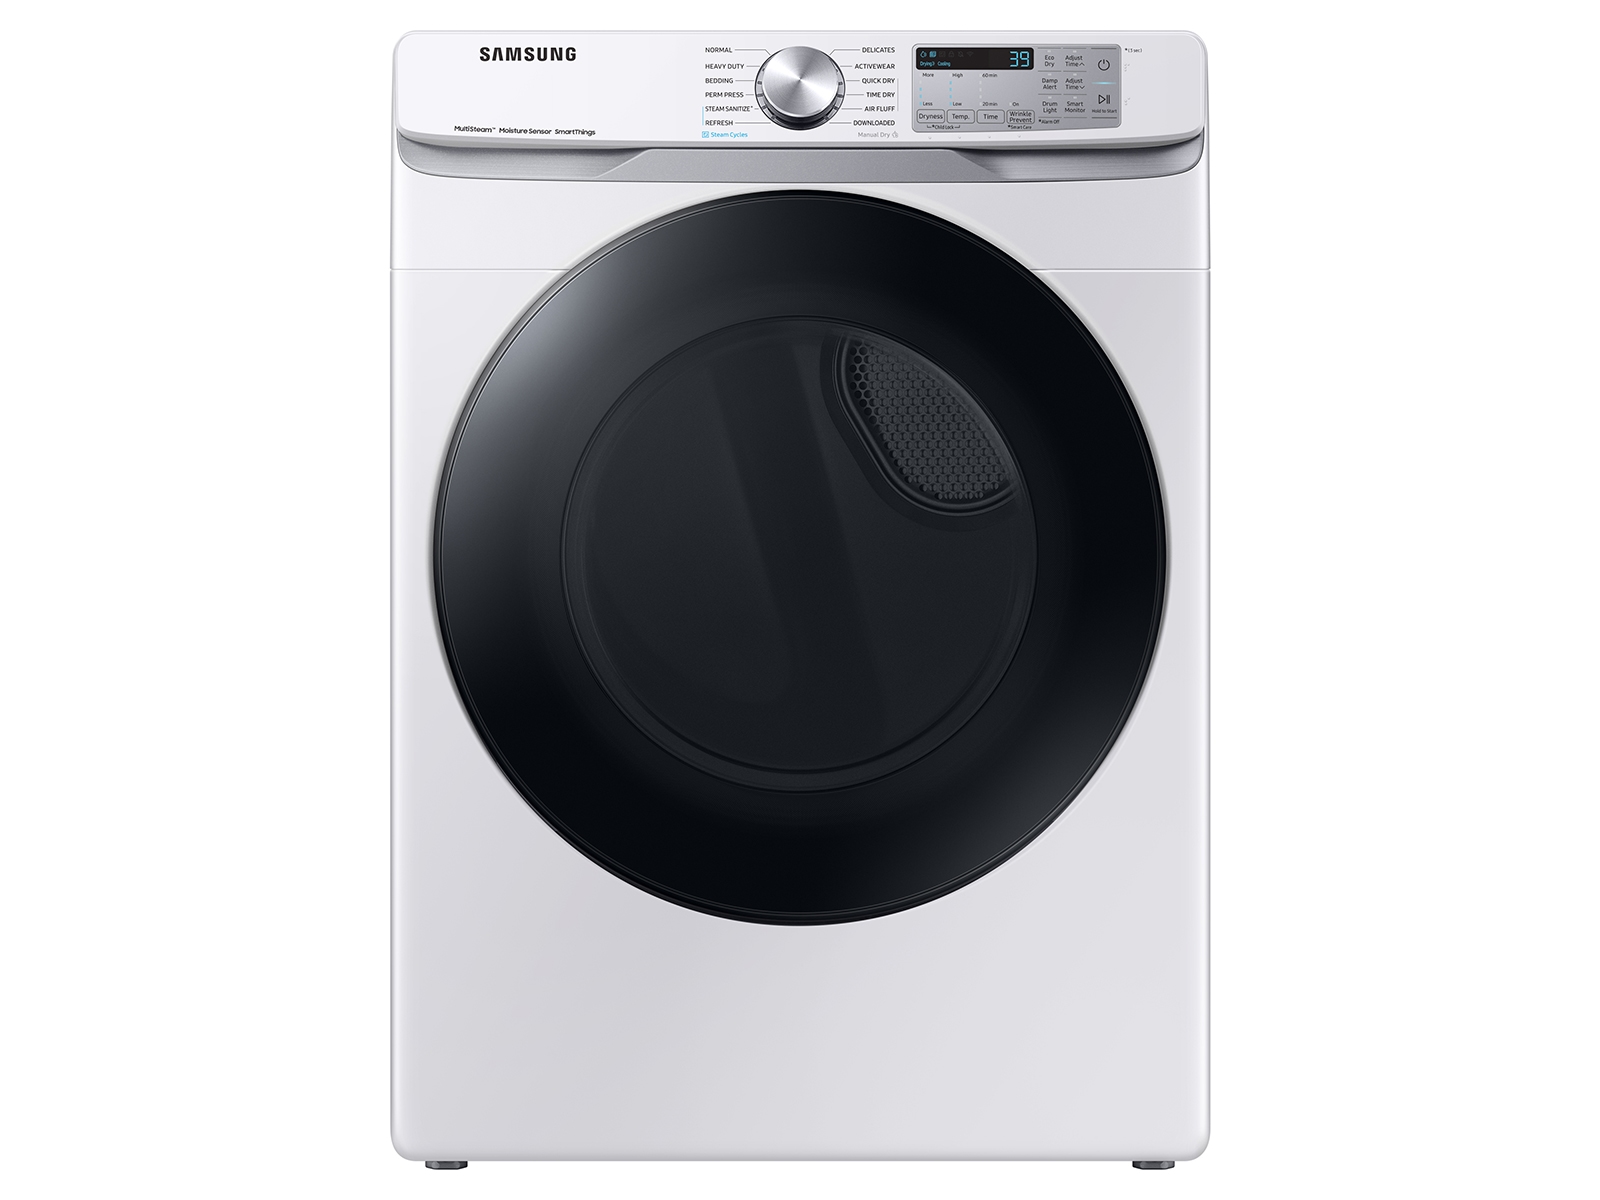 Samsung 7.5 cu. ft. Smart Gas Dryer with Steam Sanitize+ in White(DVG45B6300W/A3)